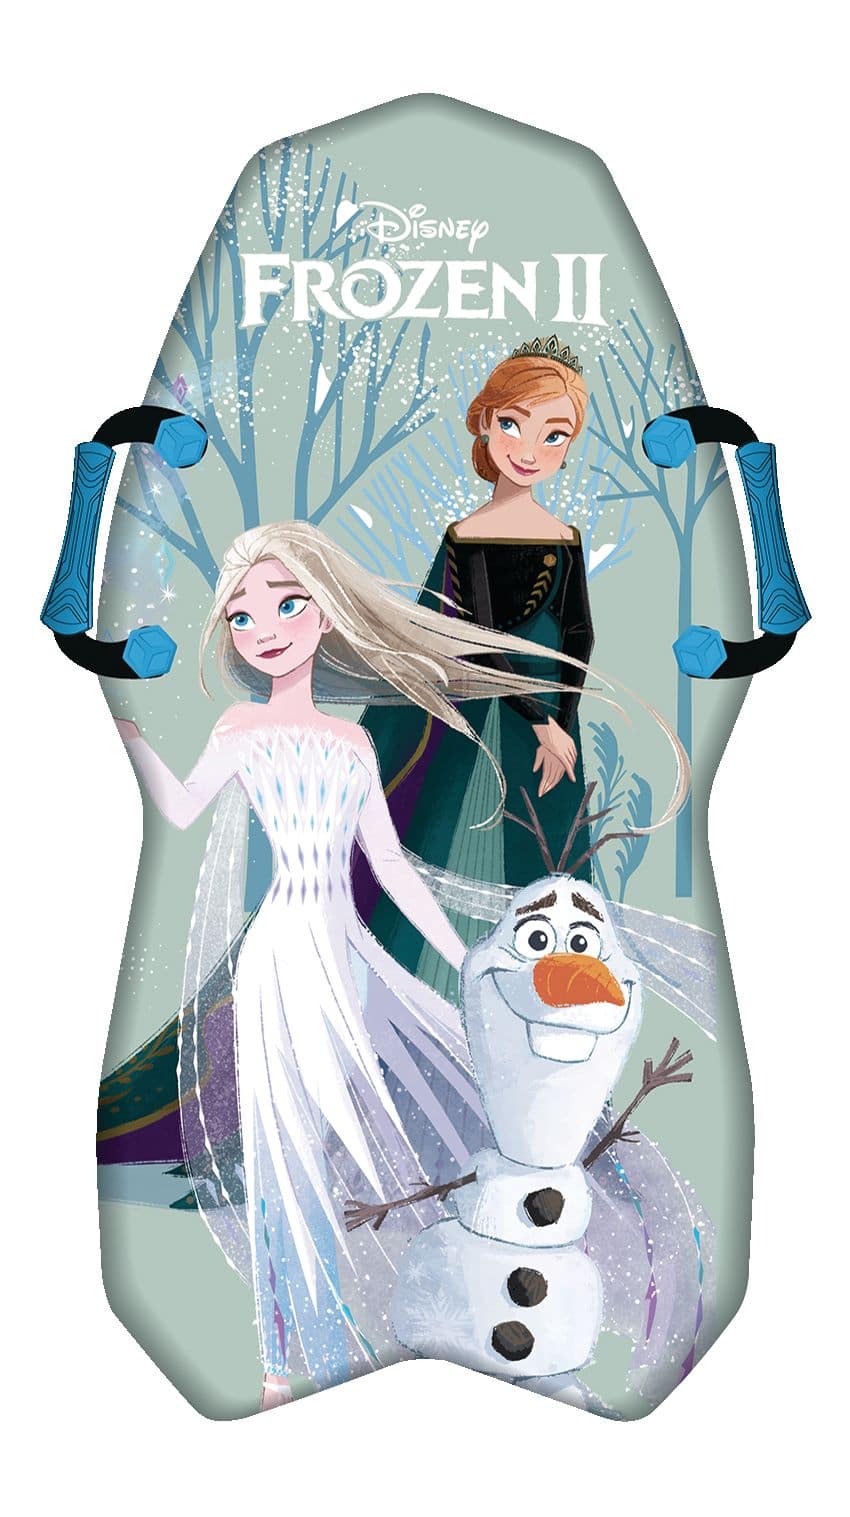  Disney Frozen Sledding Adventures : Toys & Games